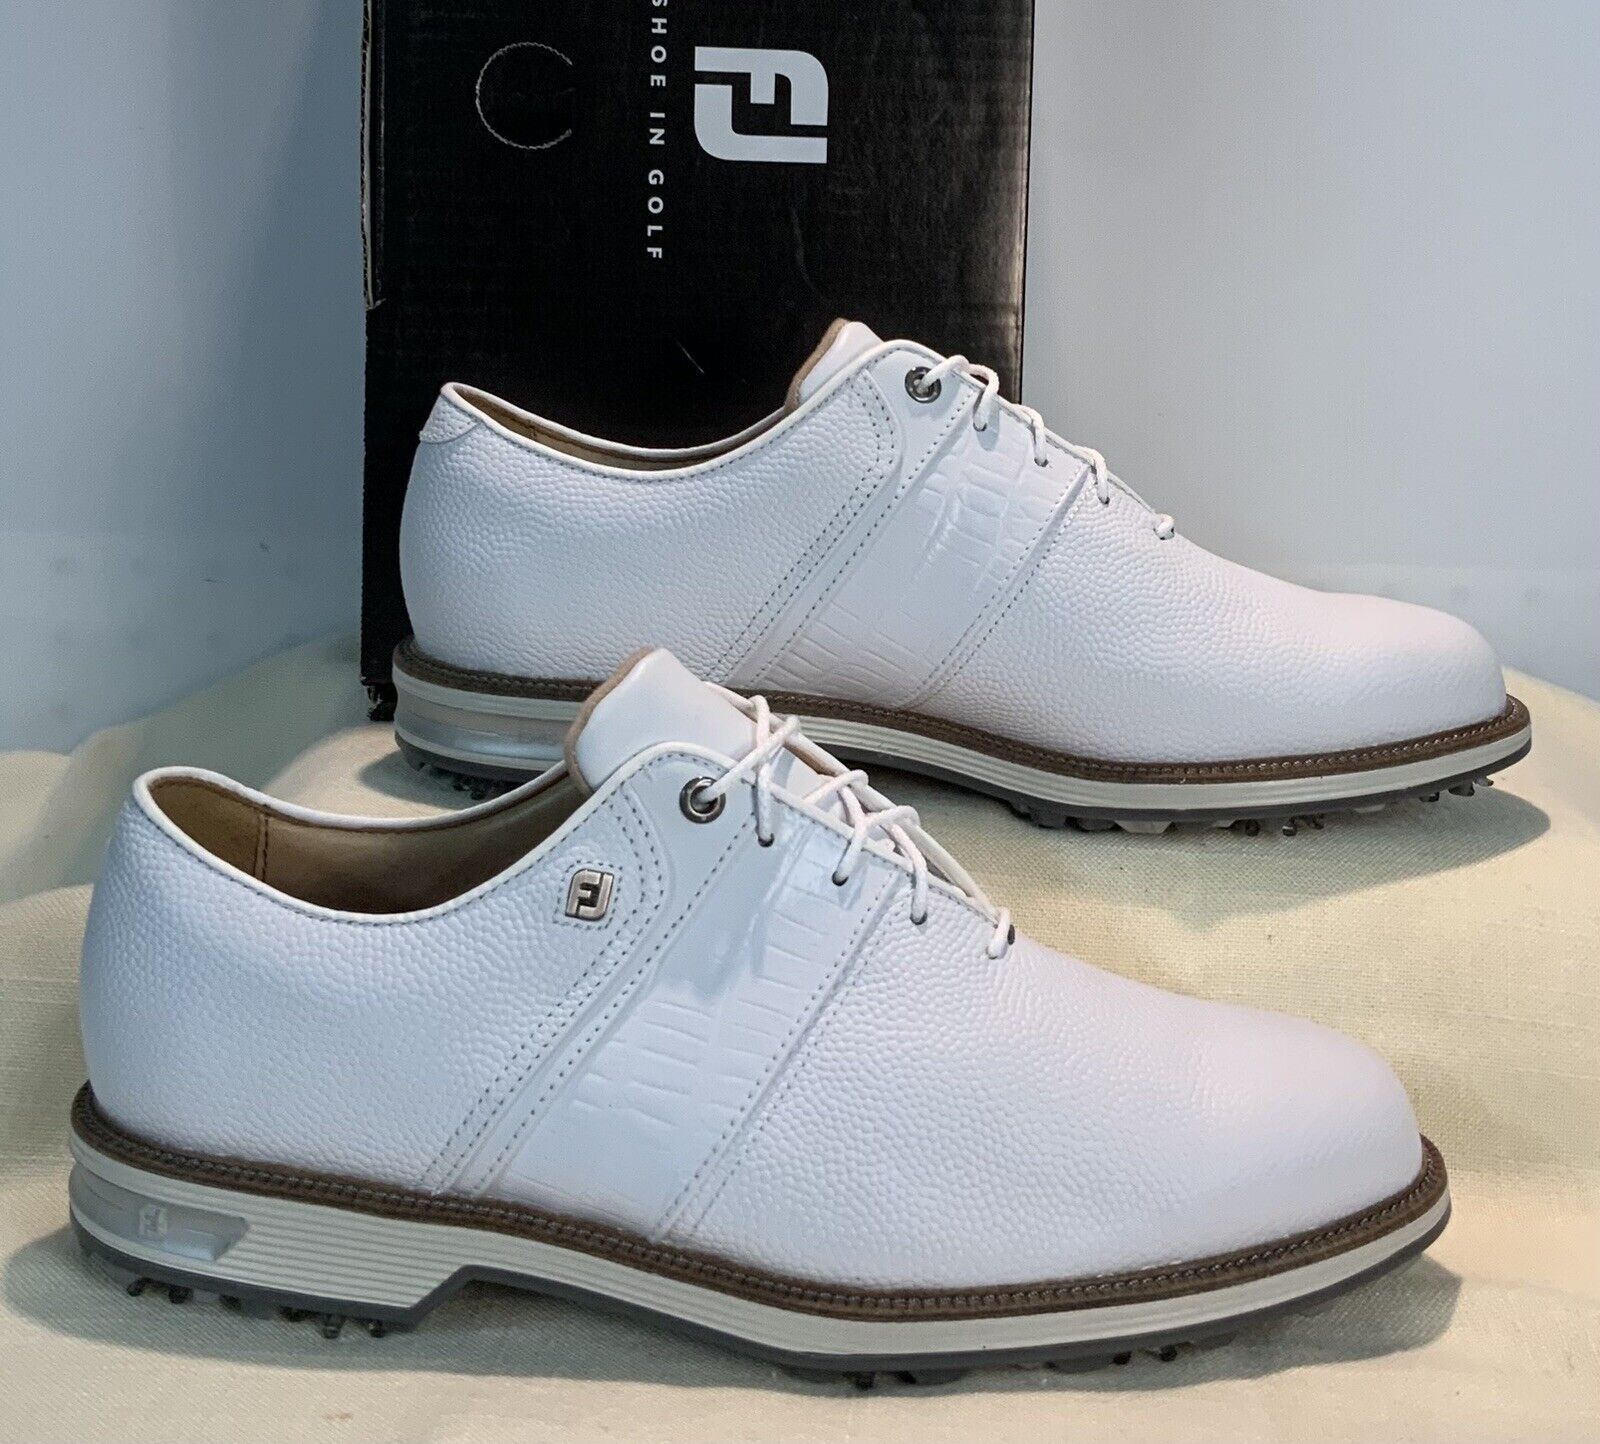 Men’s FOOTJOY MYJOYS Premiere Series Packard Golf Shoes White Gator Size 10W